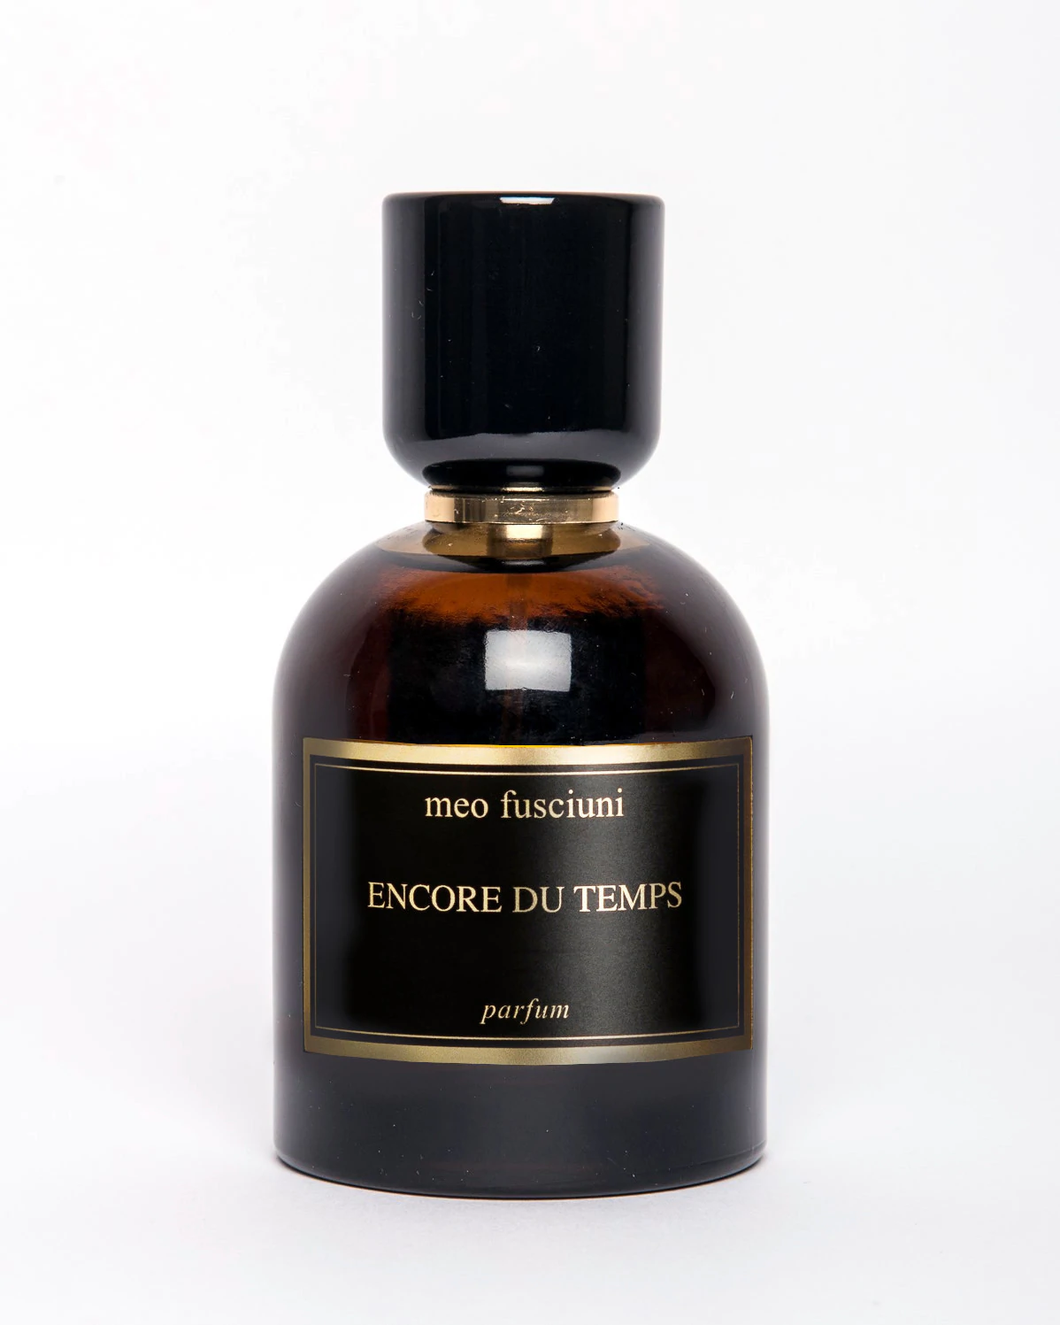 Meo Fusciuni - Encore du Temps perfume bottle with cap in plain white background. 